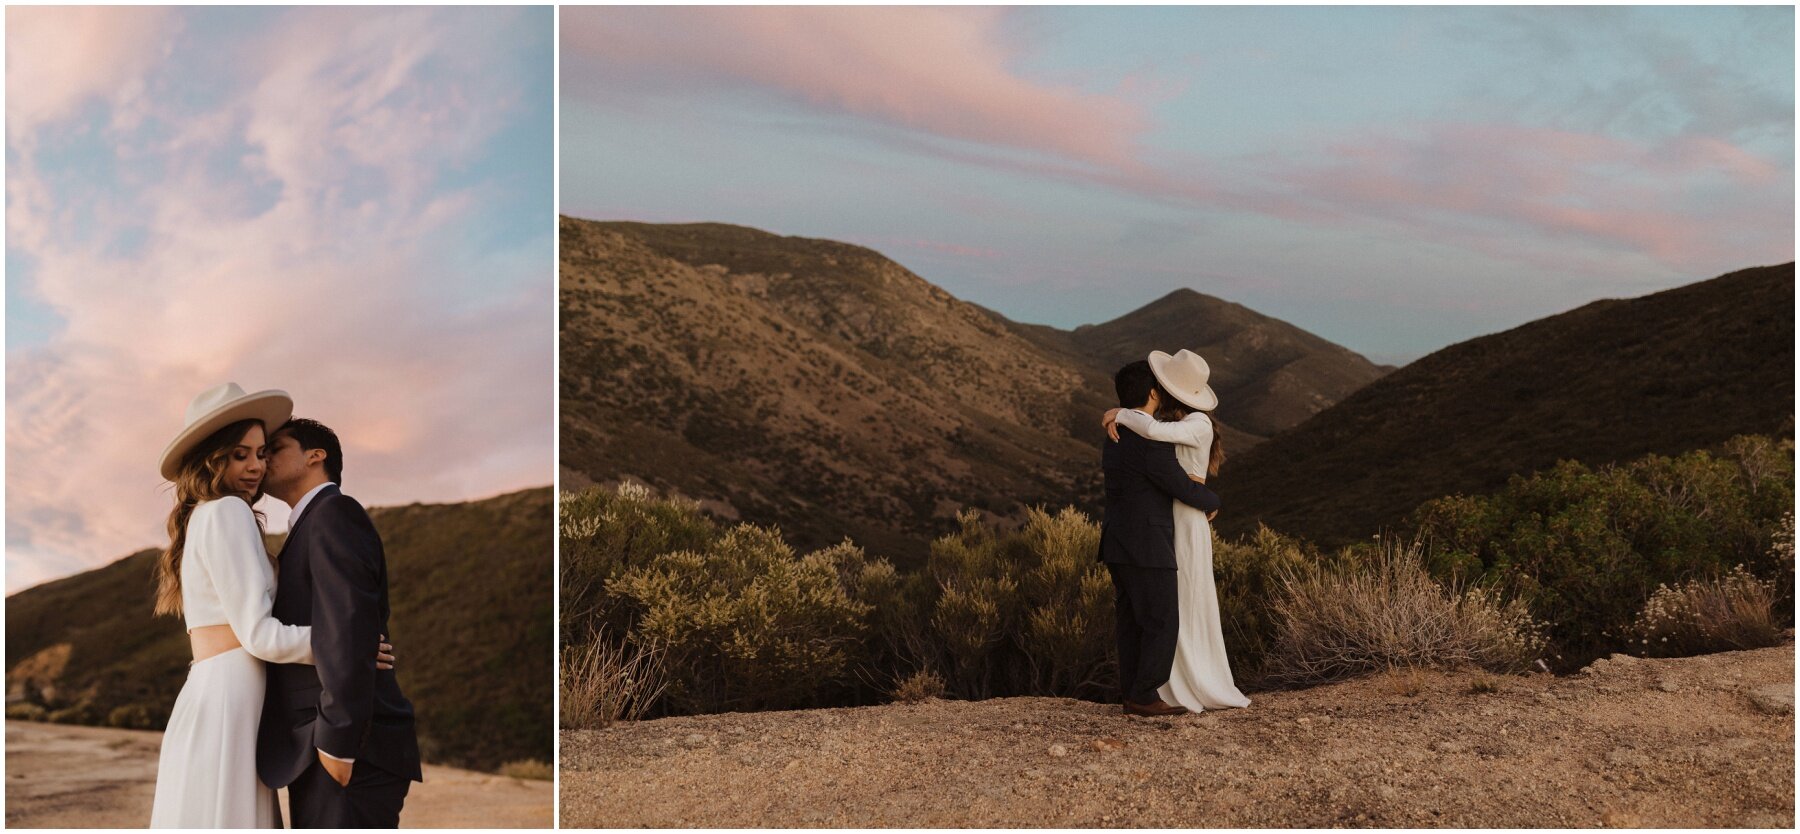 desert engagement session in california - erika greene photography - couples photographer_0024.jpg